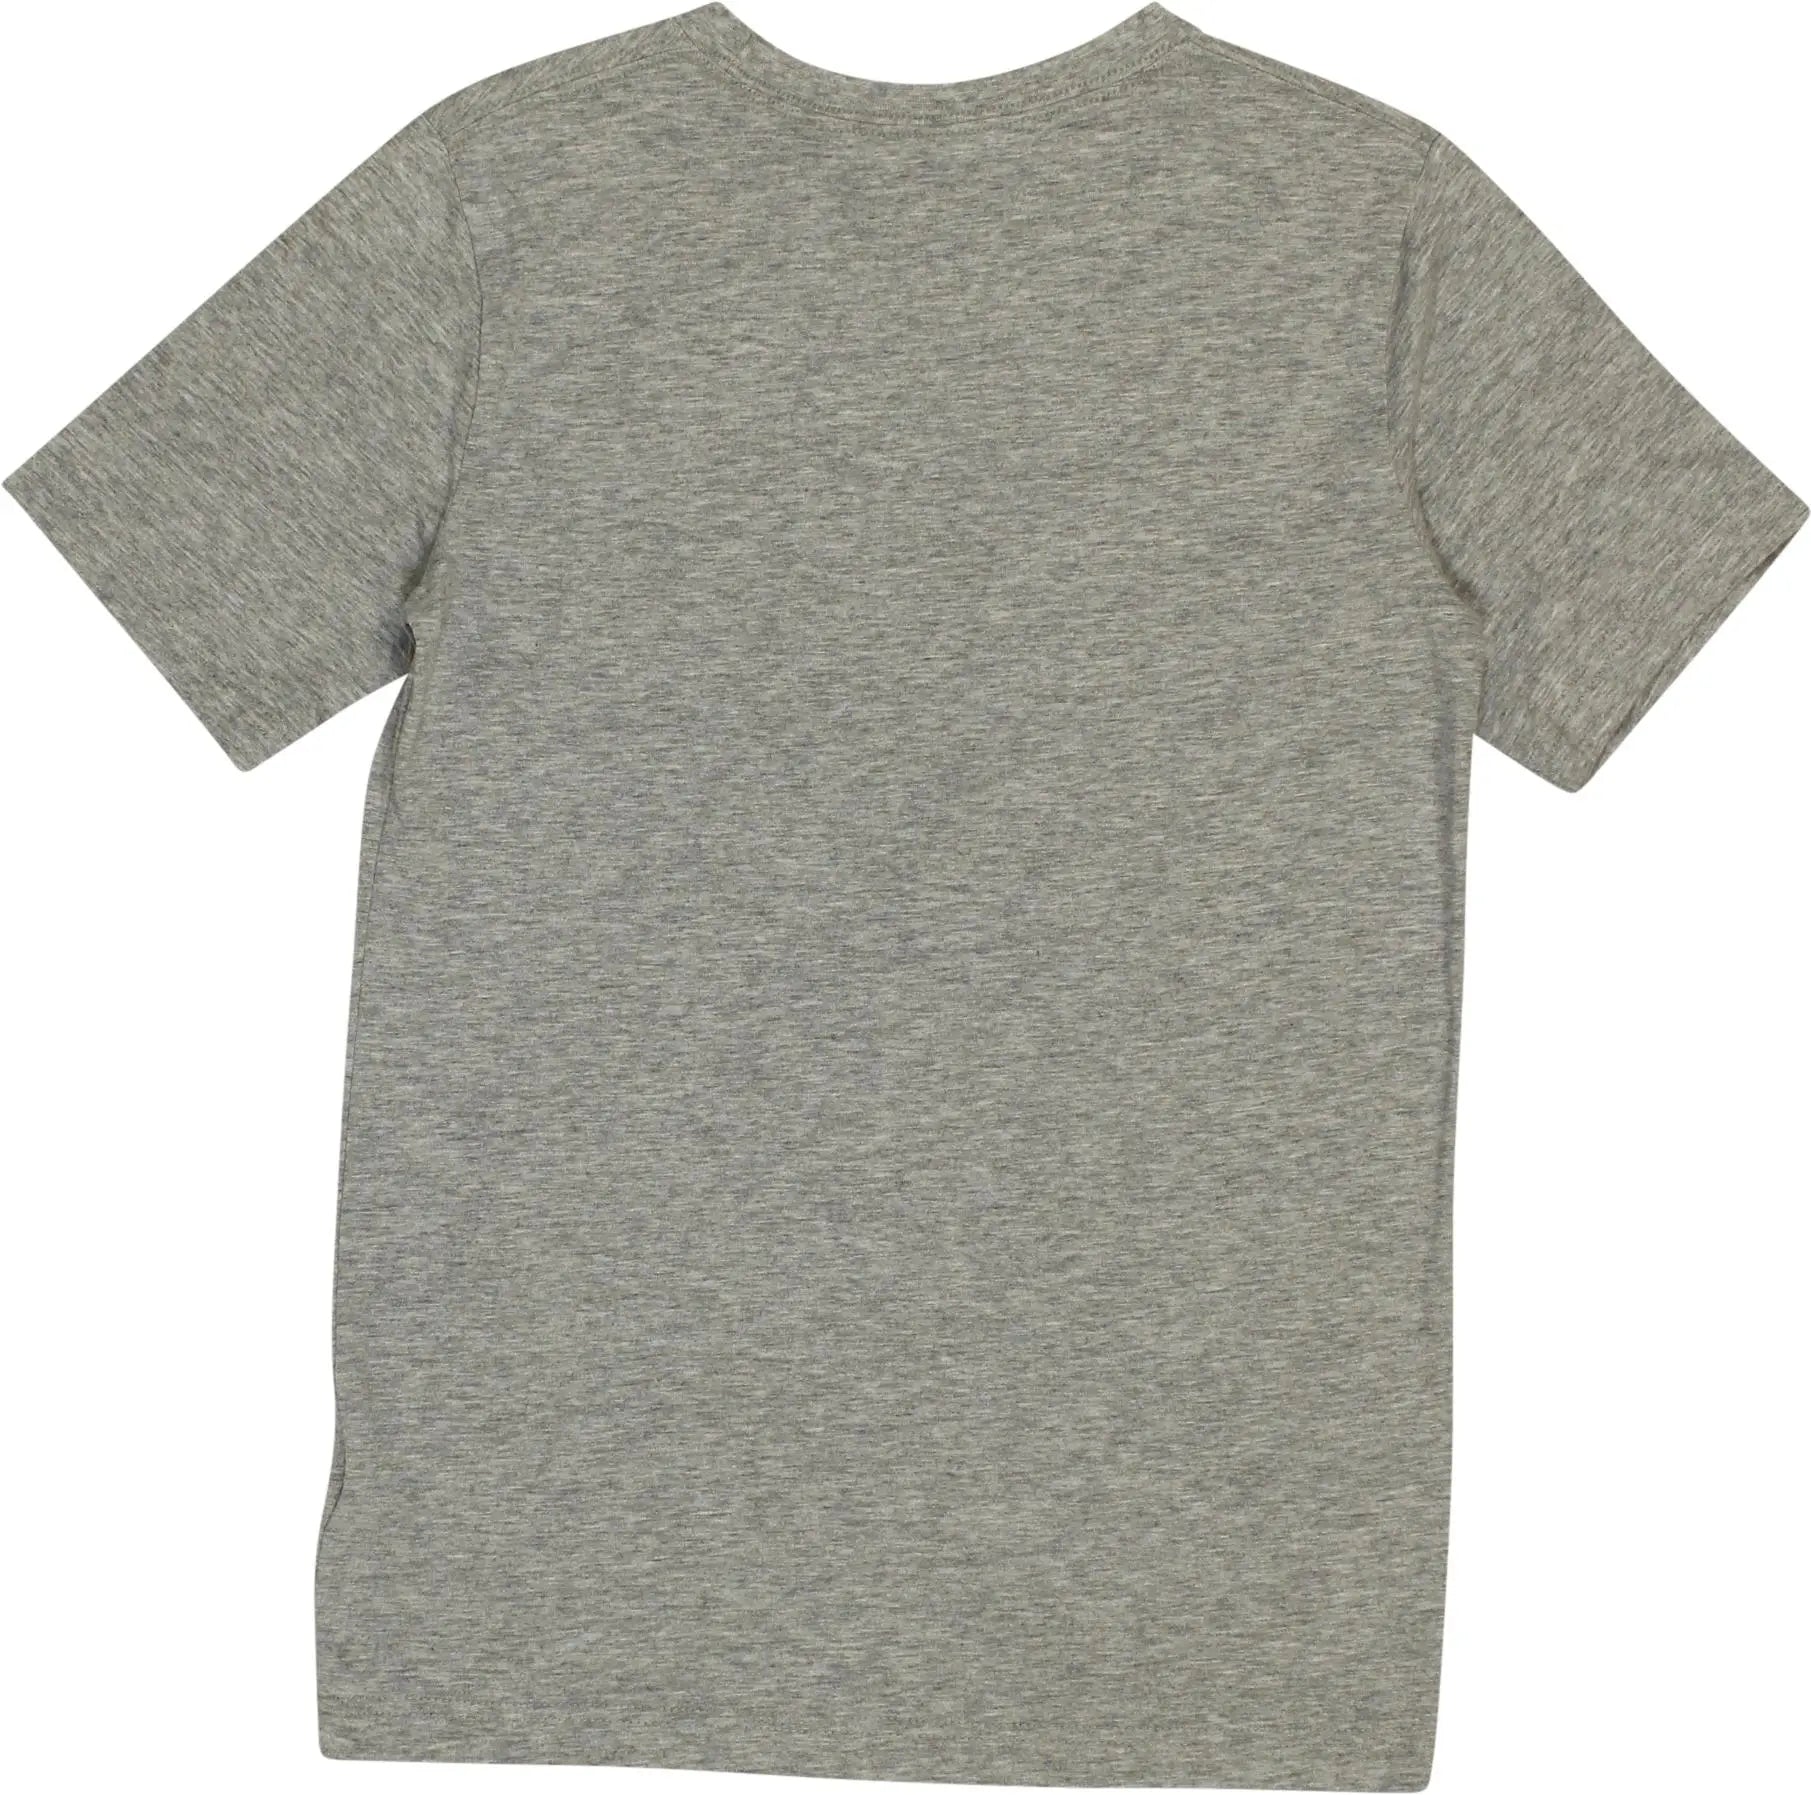 Jordan - T-shirt- ThriftTale.com - Vintage and second handclothing